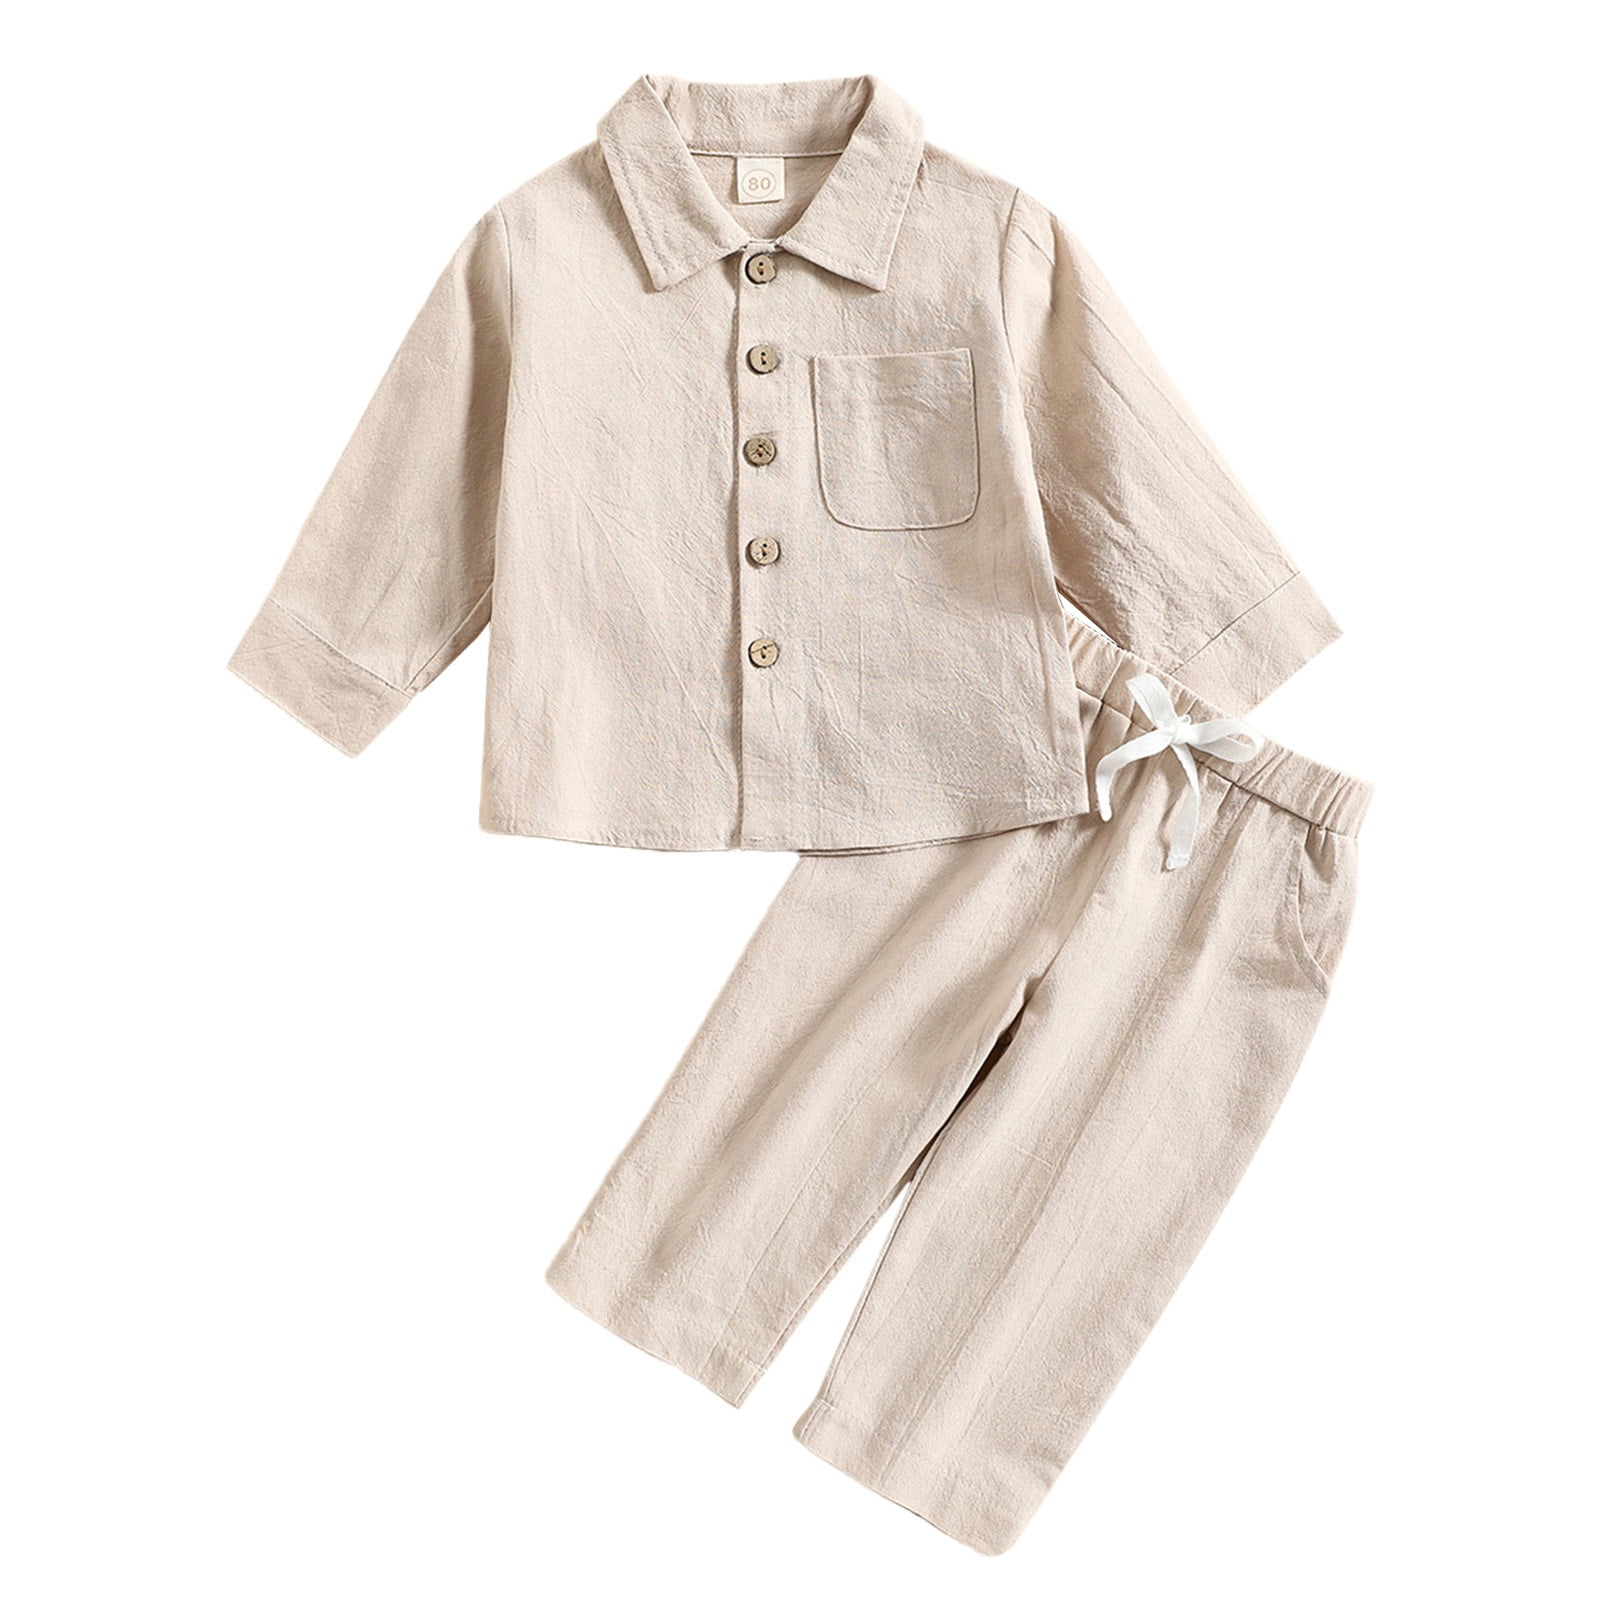 Lbecley Toddler Boys' Long Sleeve Designer Clothes